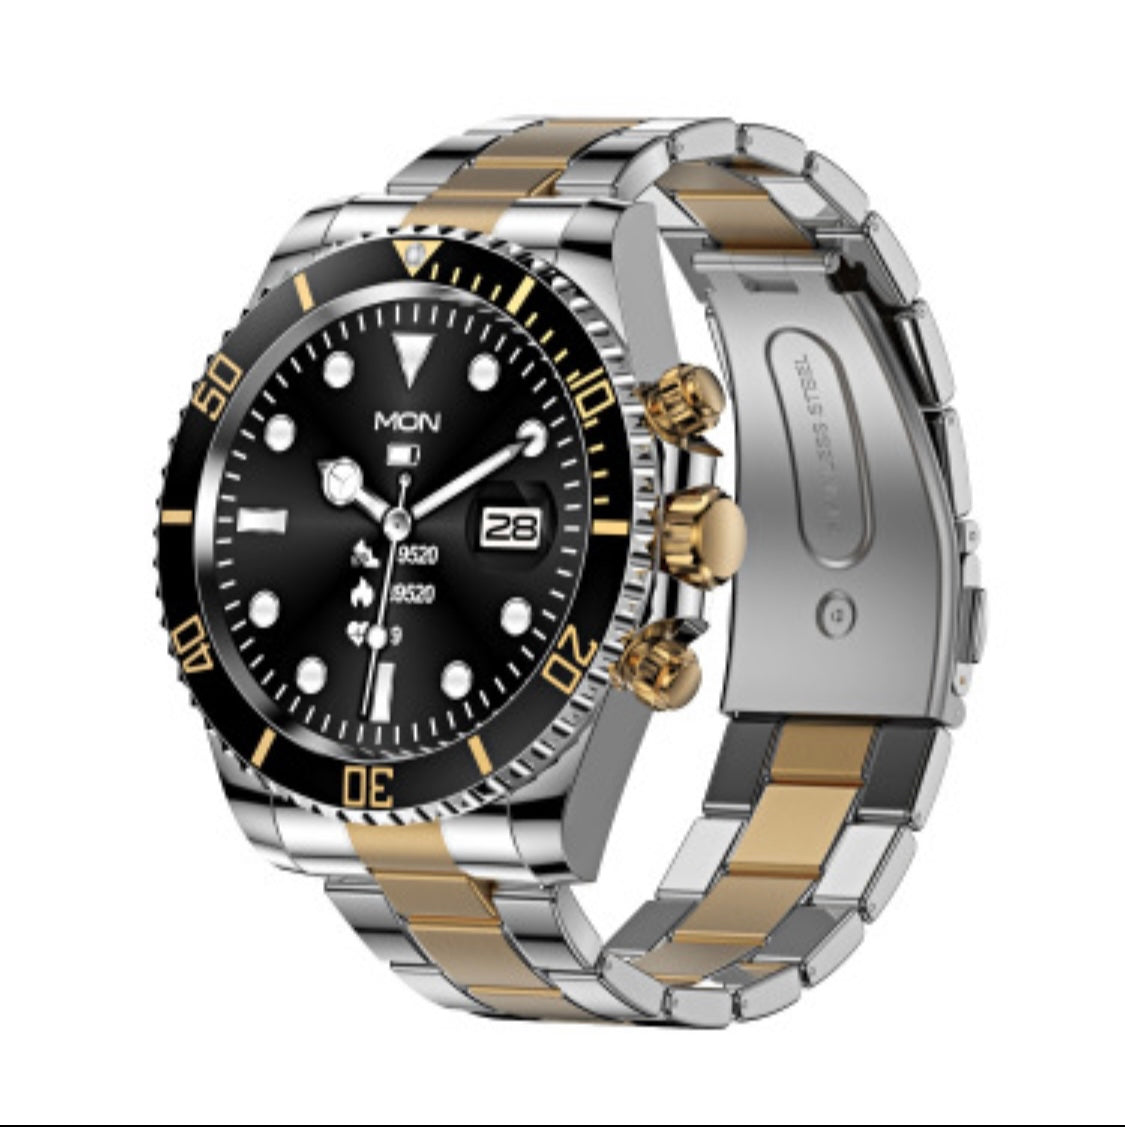 Submariner Style Smart Watch